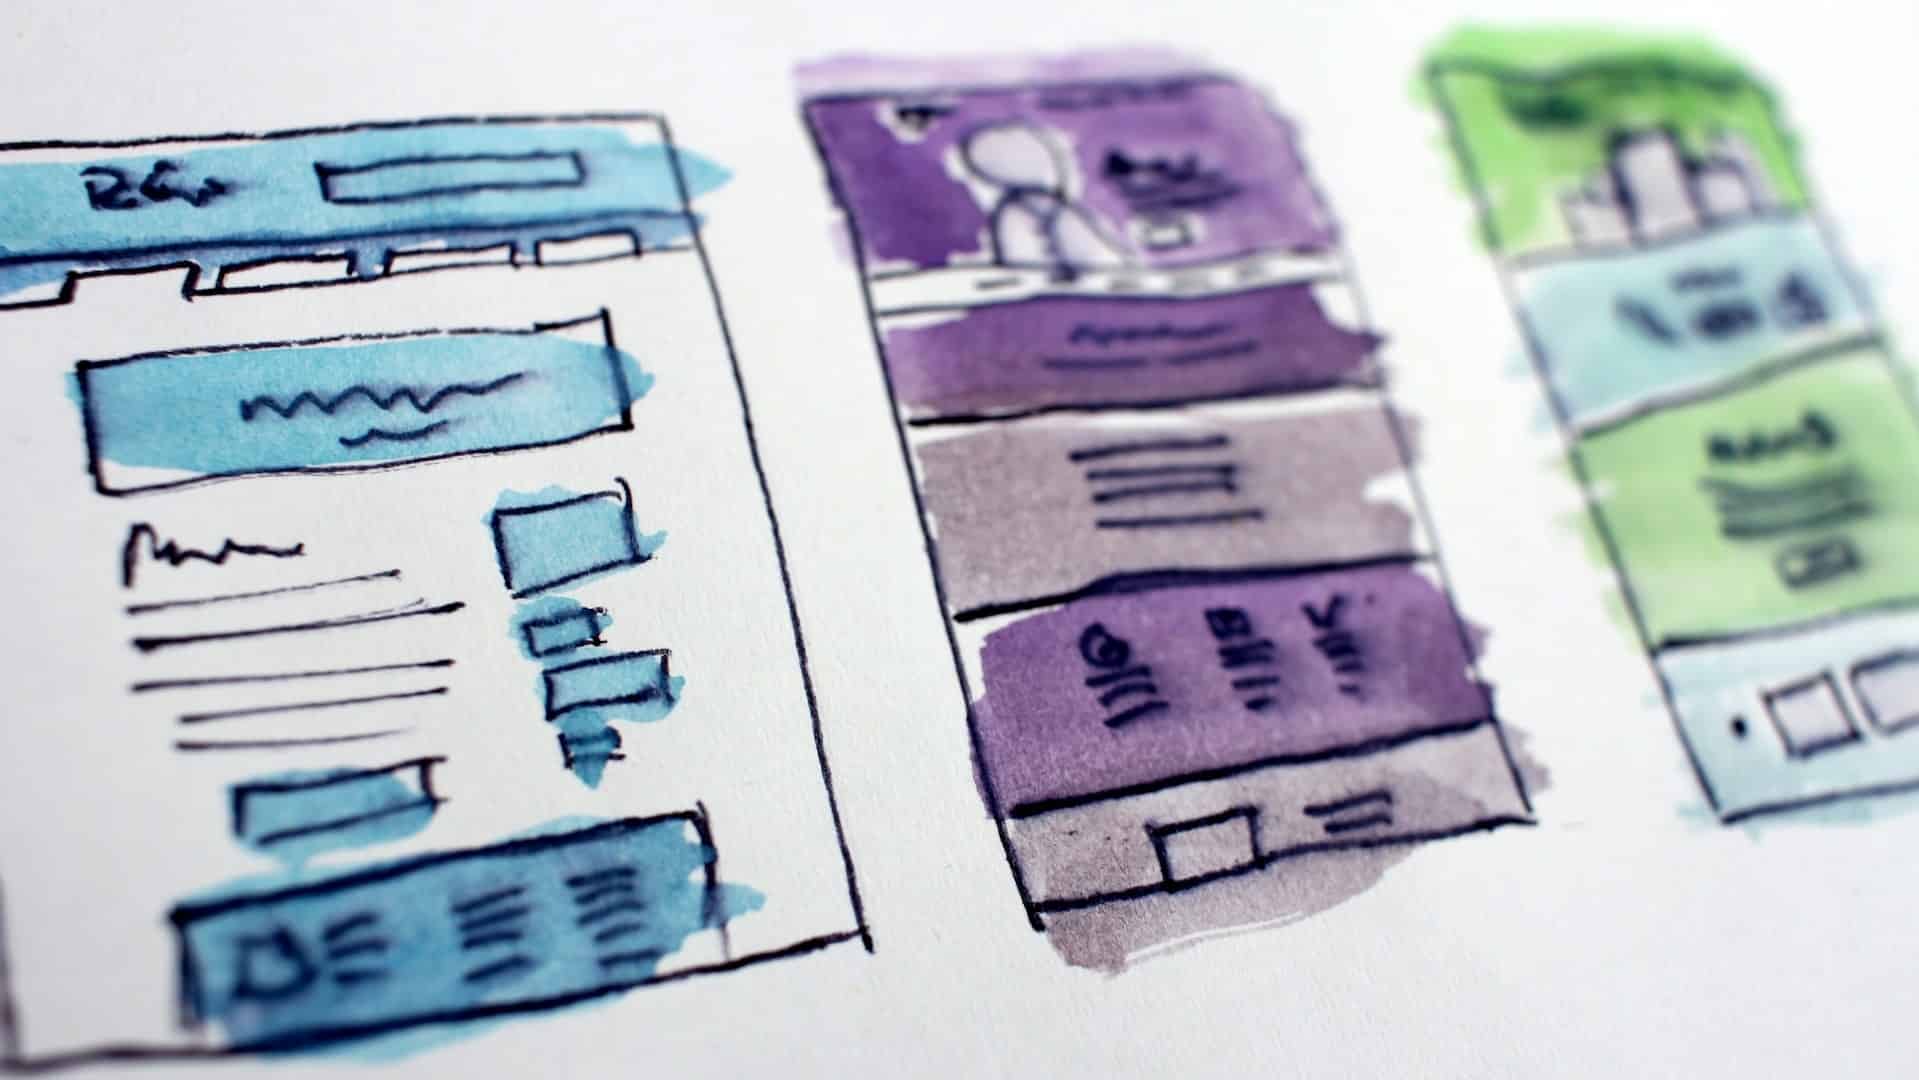 A restaurant website design sketch.